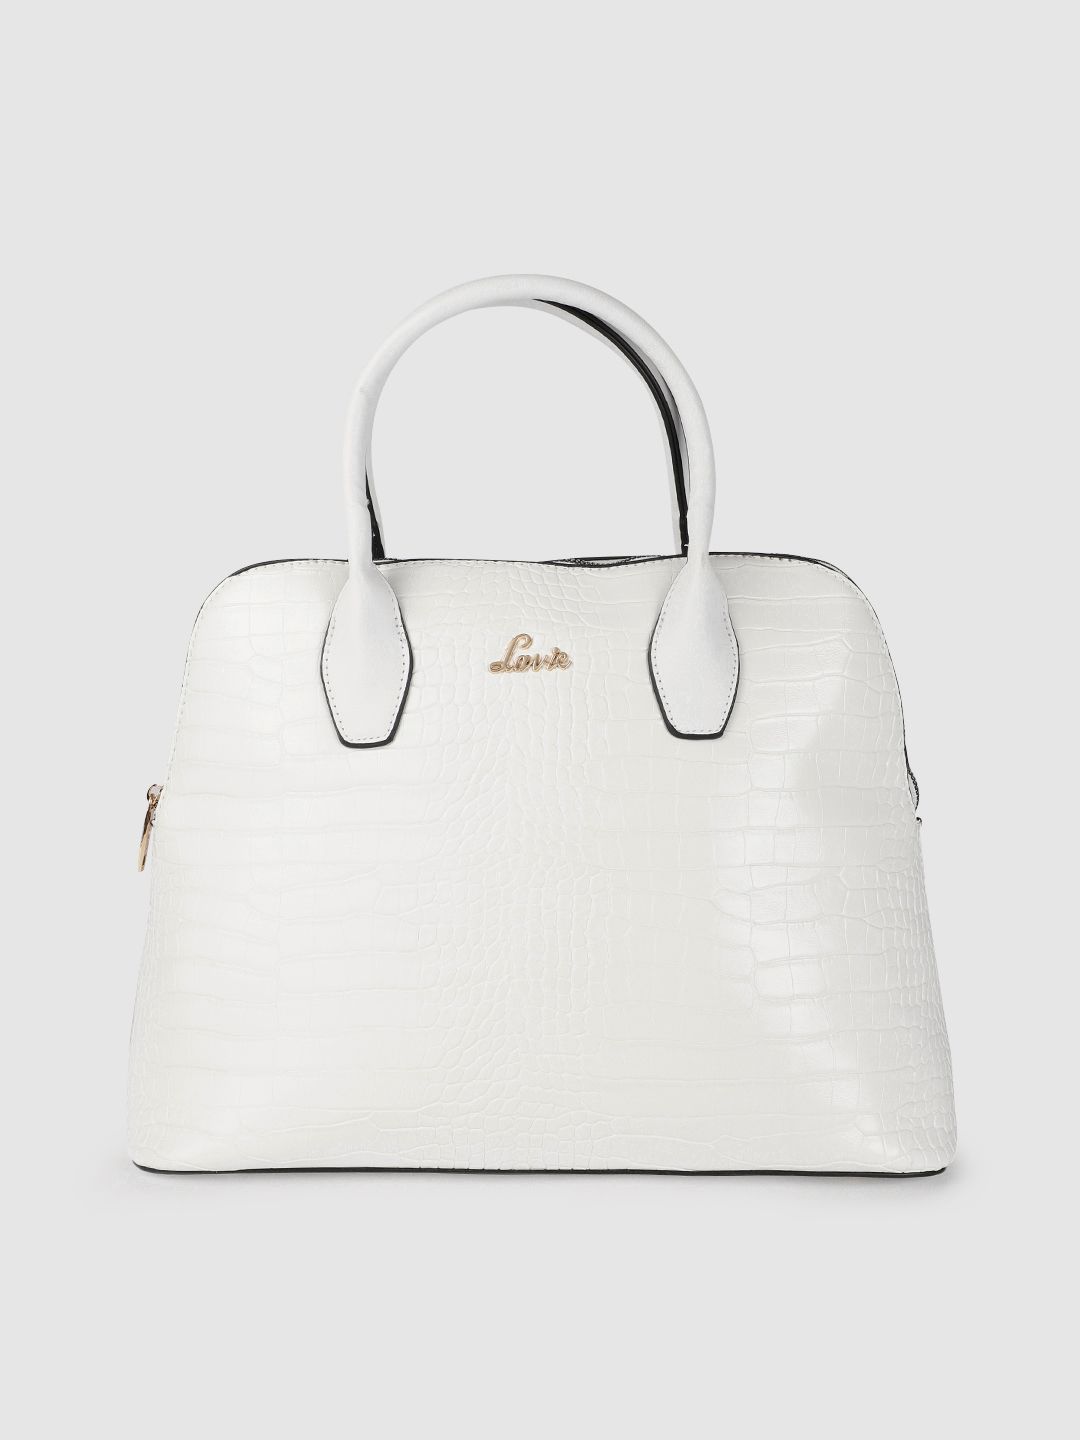 Lavie White Animal Textured PU Structured Handheld Bag Price in India